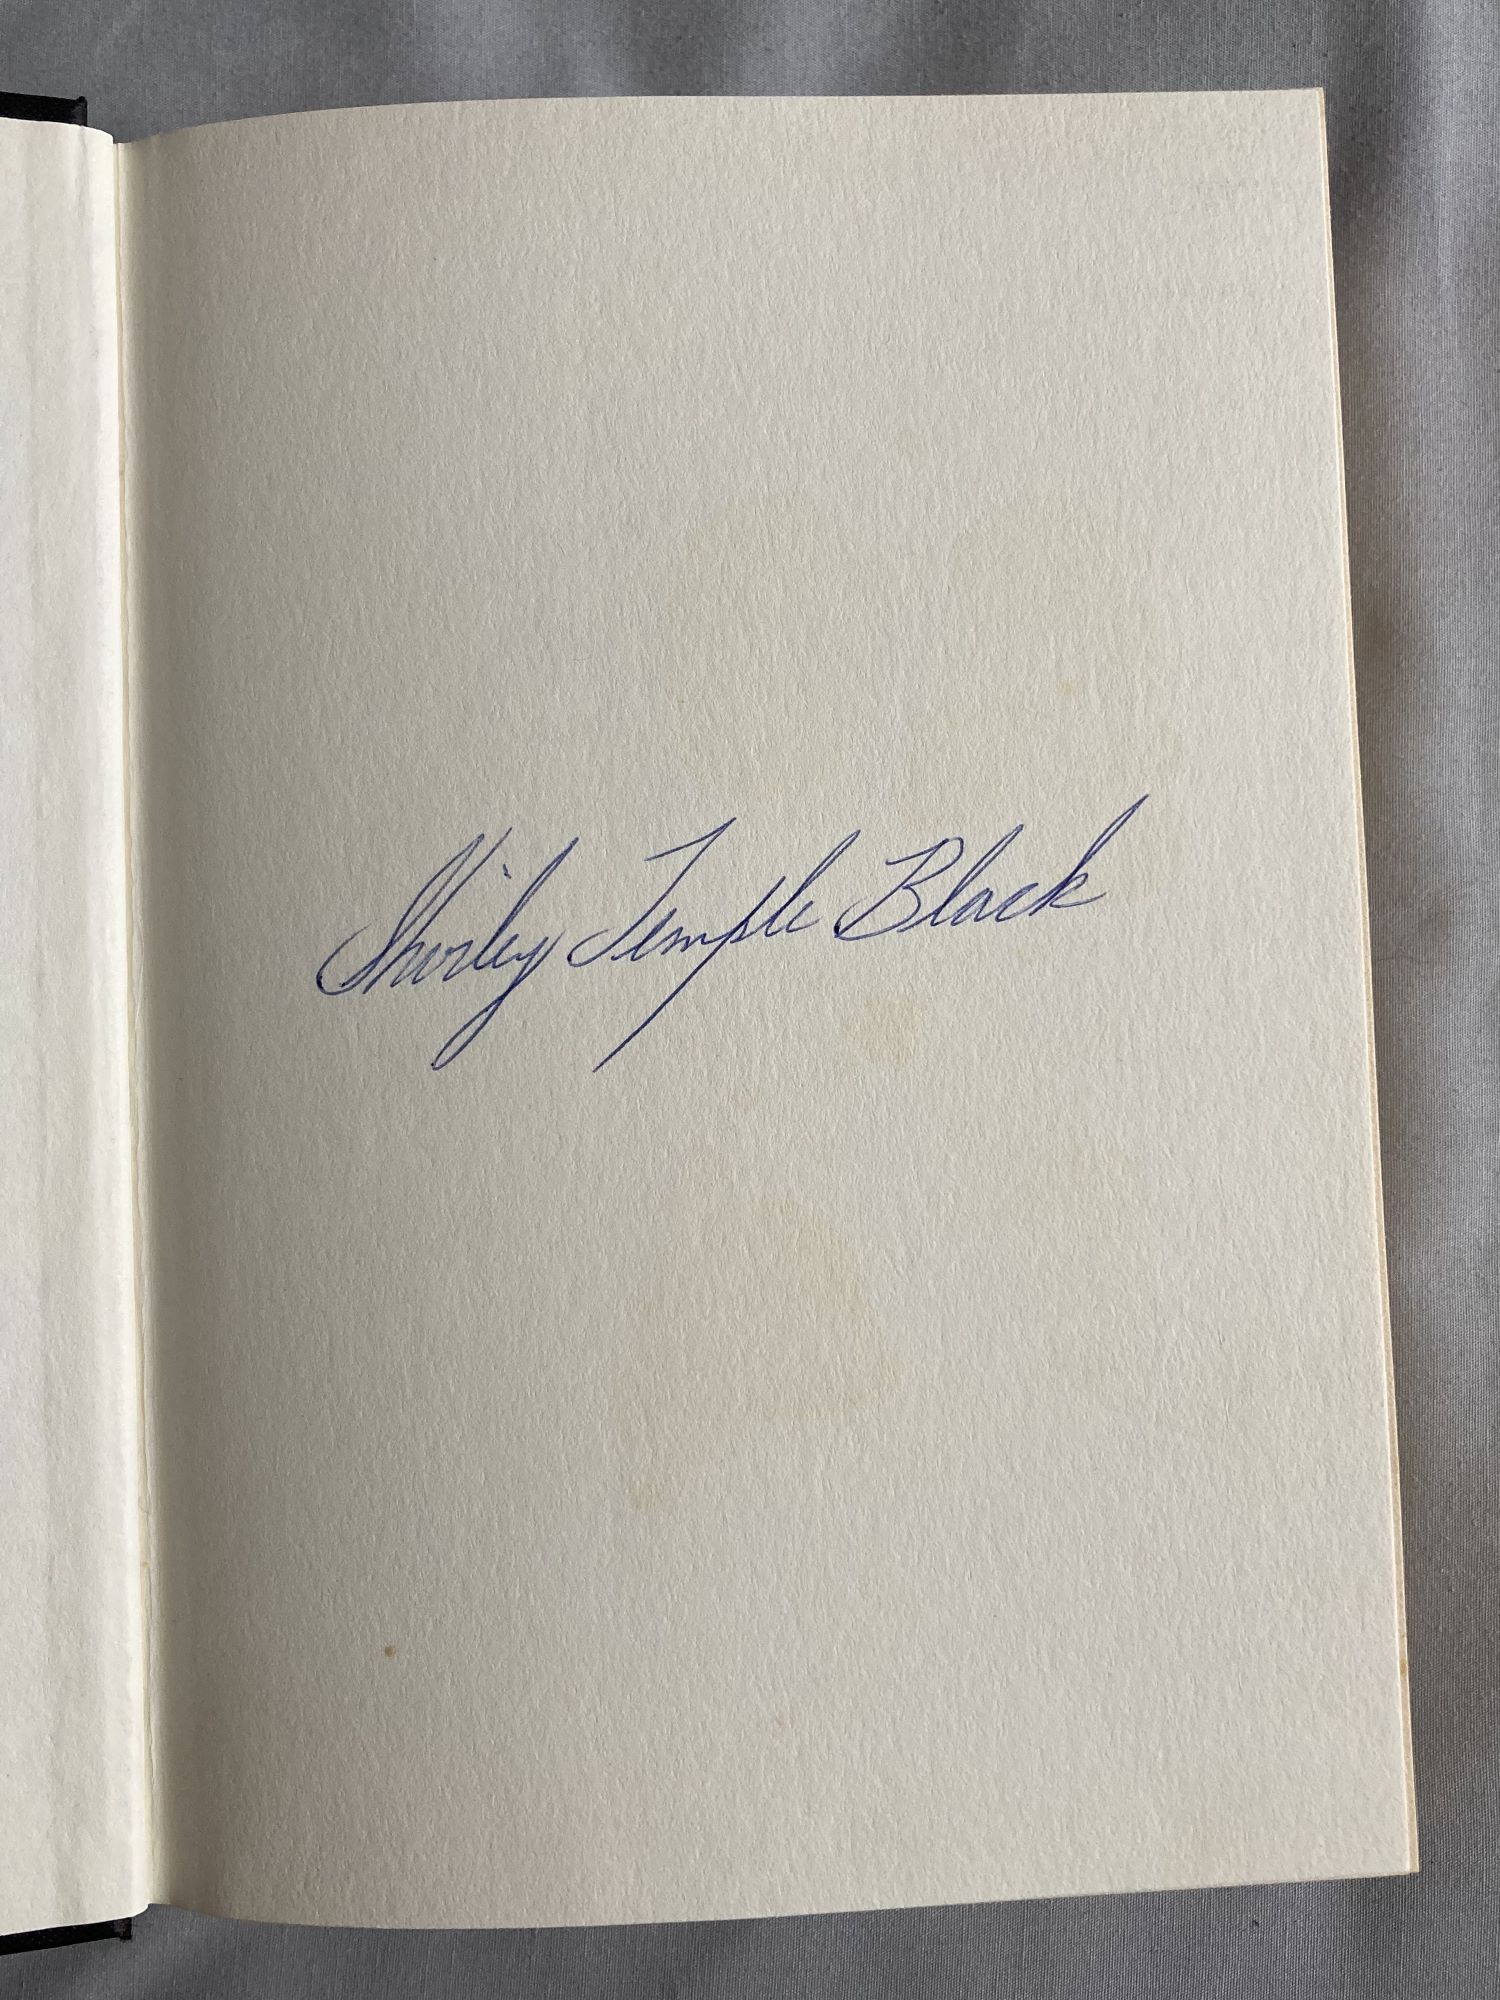 Shirley Temple Black signed inside hardback book. Child Star an Autobiography. Inscription on inside - Image 2 of 3